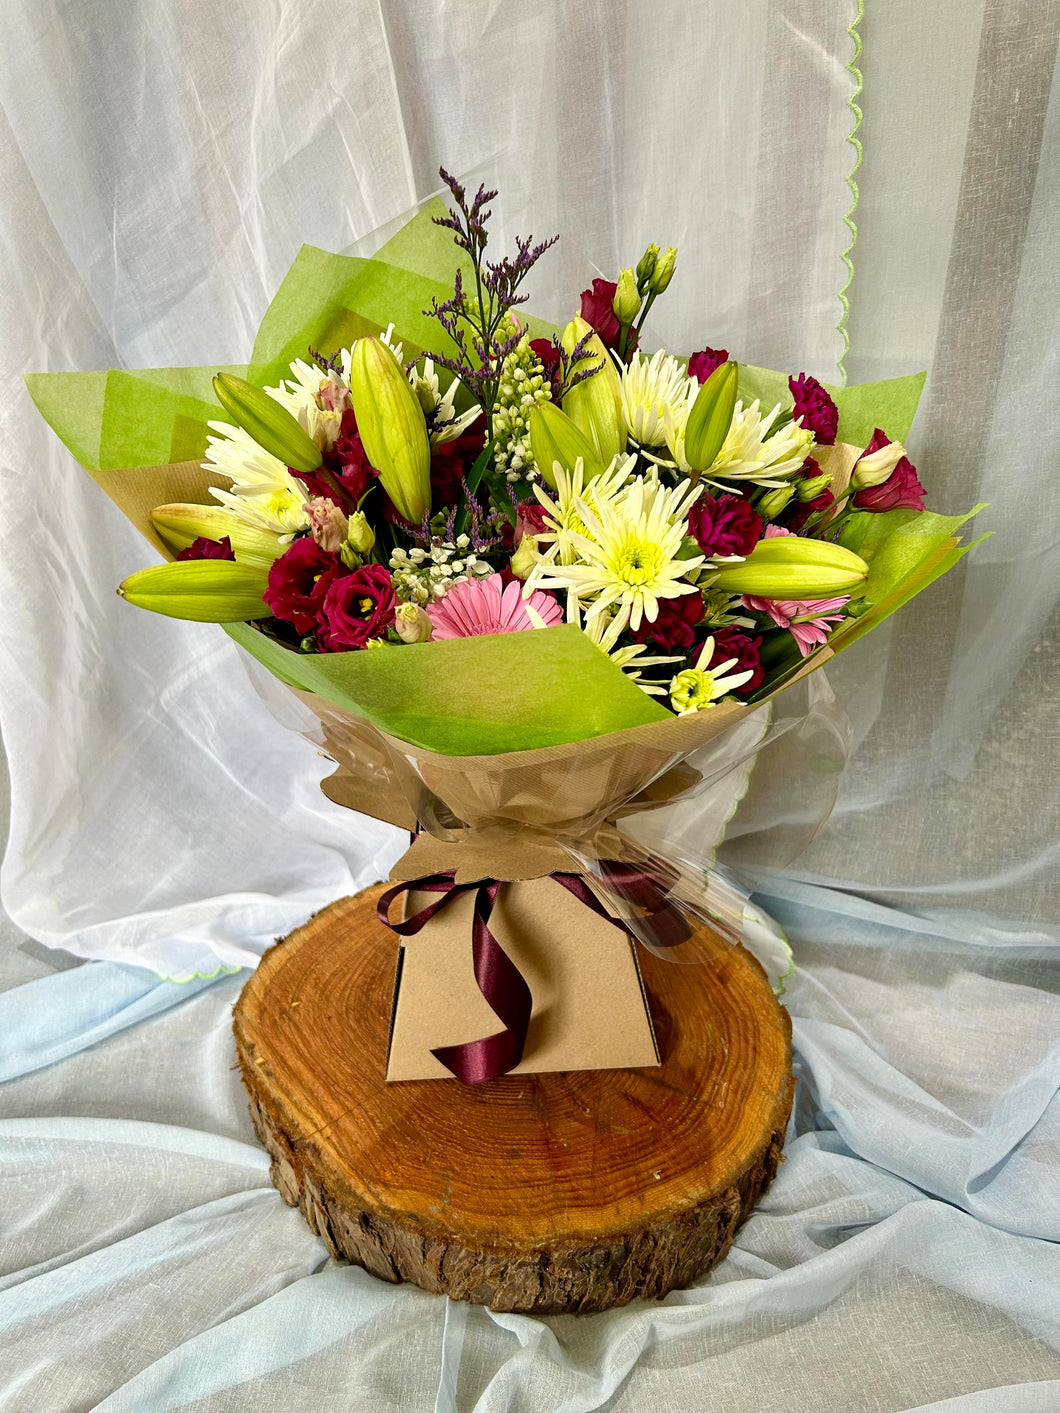 £45 Florist Choice Hand-Tied Bouquet